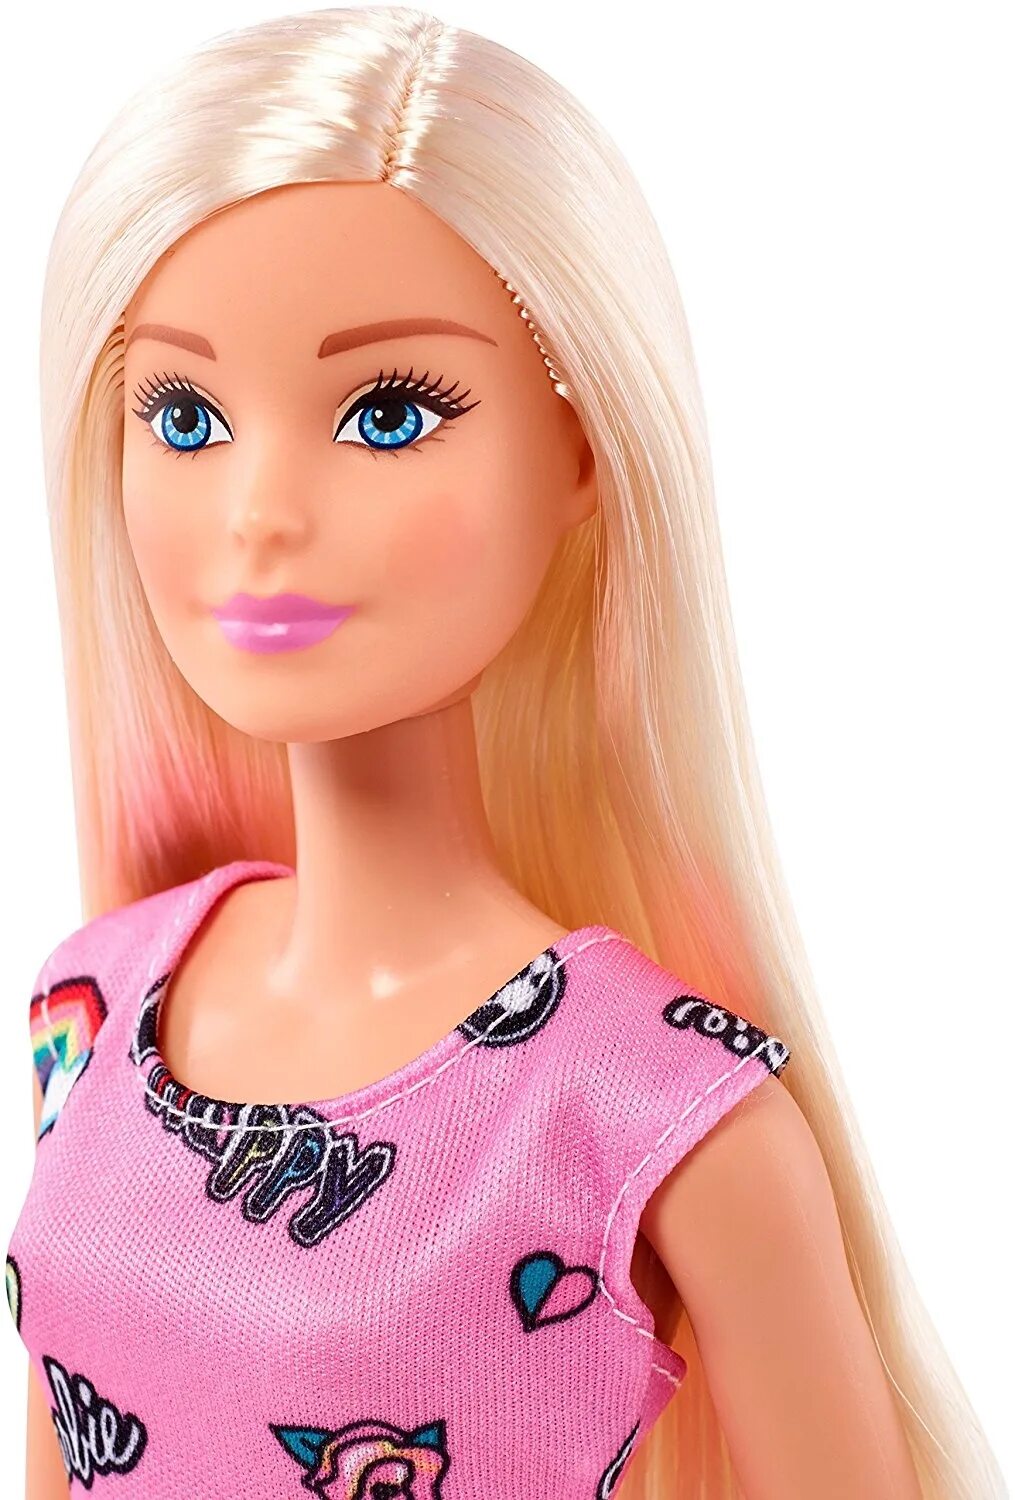 Кукла Барби t7439. Куклы Барби Маттел Барби. Барби fjf35. Кукла Barbie Барби модная одежда t7439.